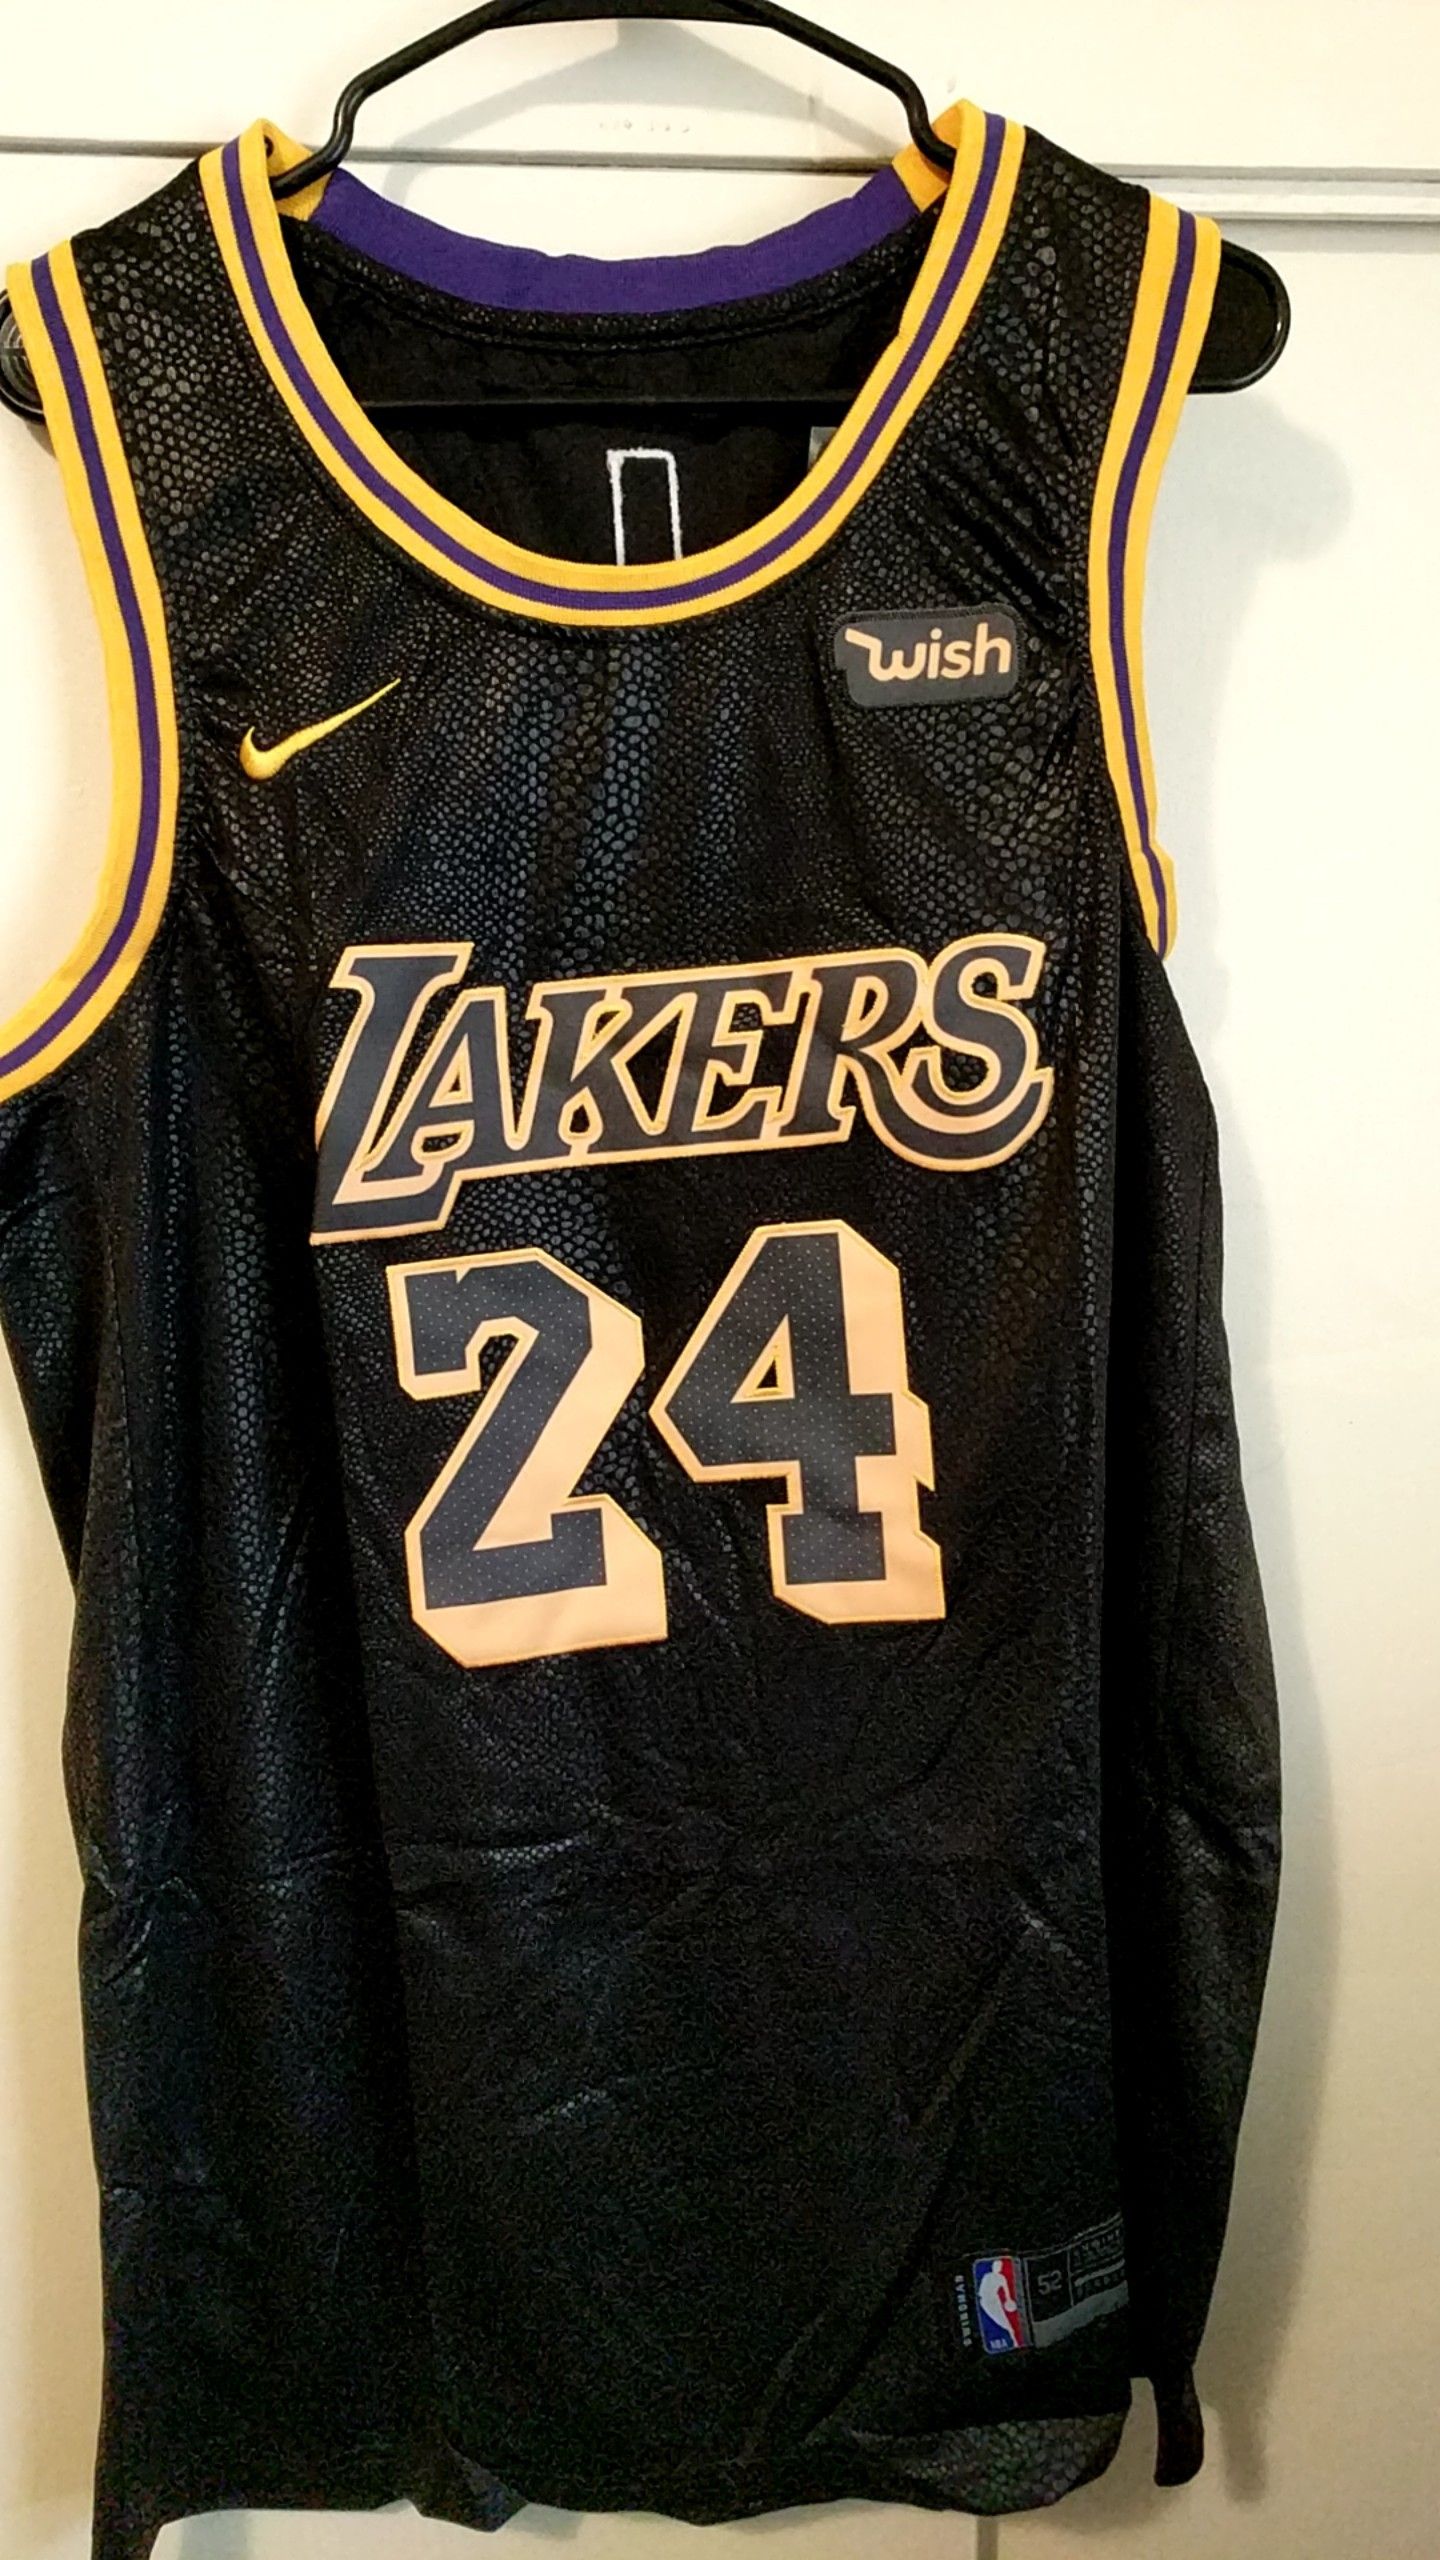 Kobe Bryant black mamba #24 jersey new and improved material sz XL